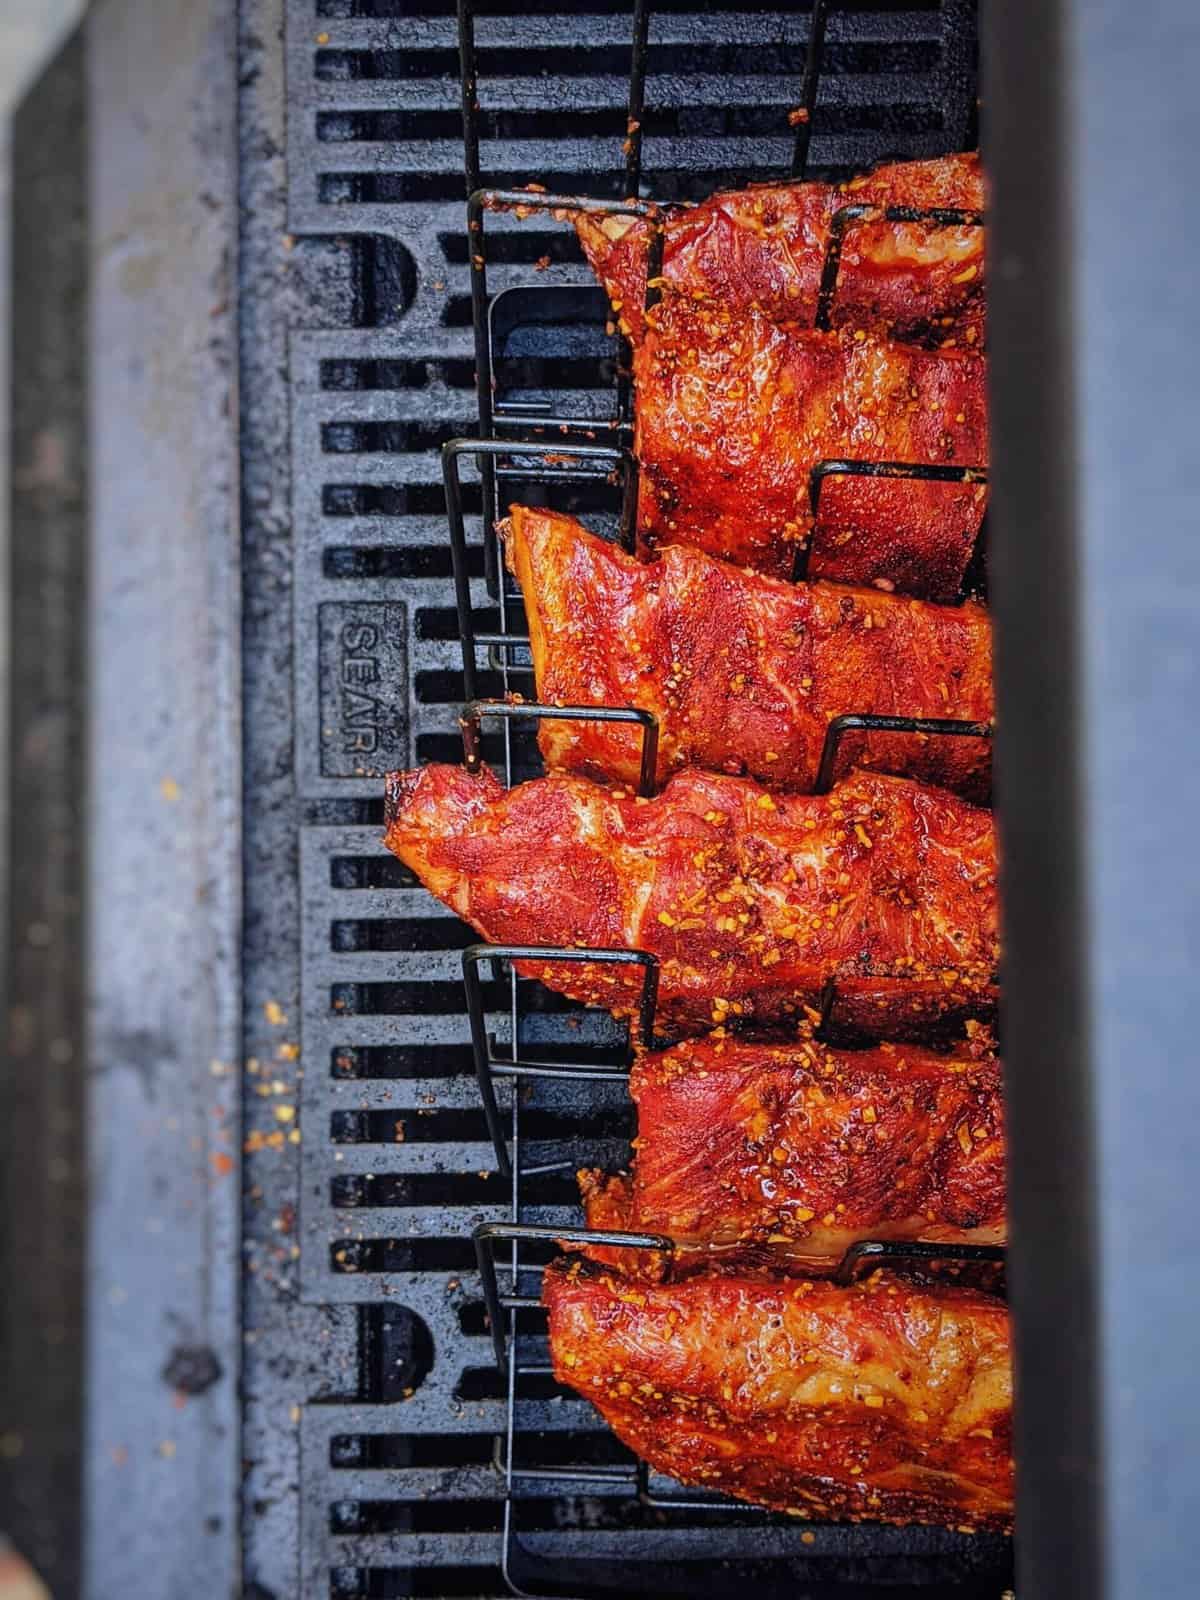 Racks of Ribs on a Masterbuilt grill.